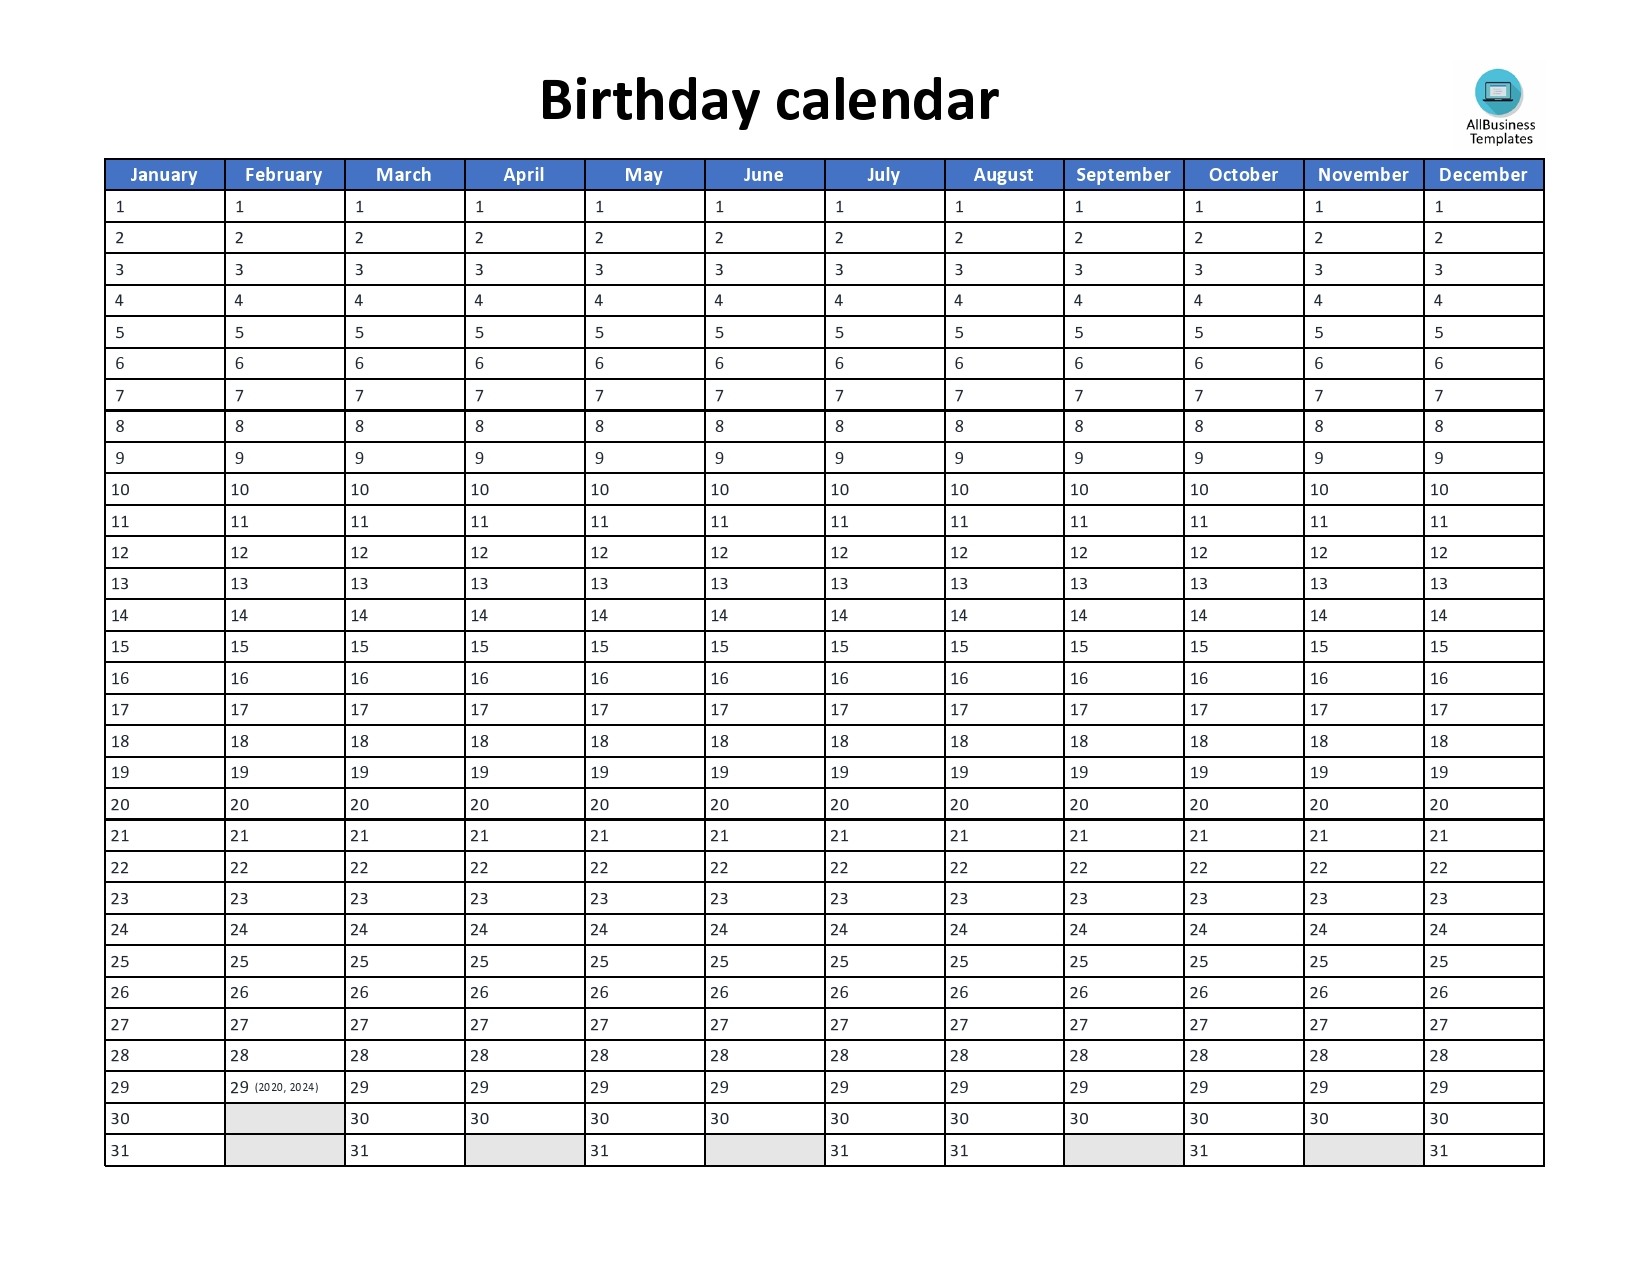 Free birthday calendar template 17